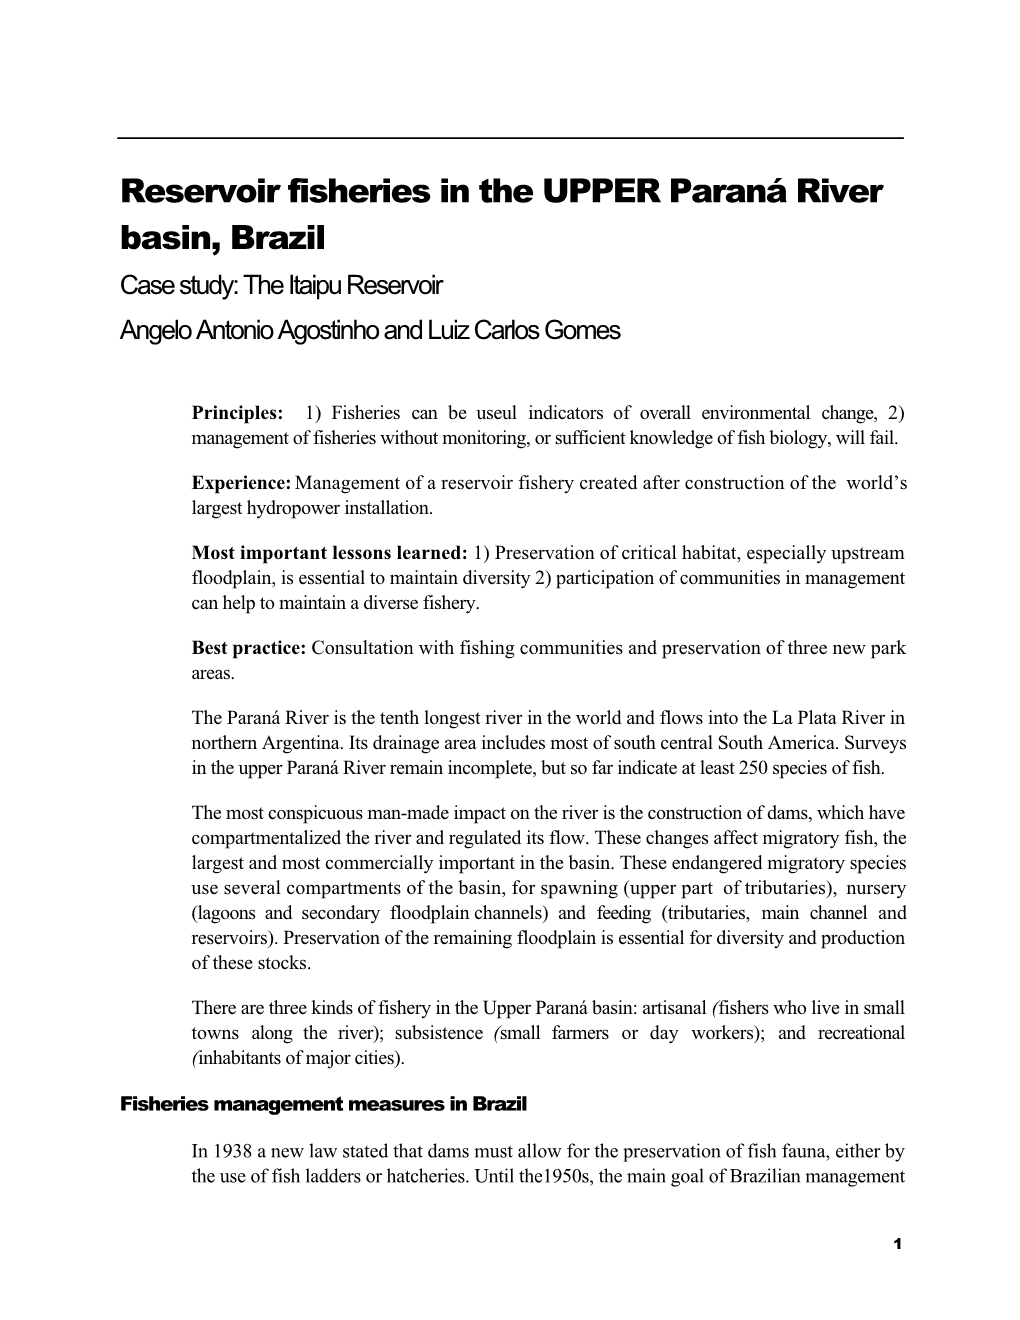 Reservoir Fisheries in the UPPER Paraná River Basin, Brazil Case Study: the Itaipu Reservoir Angelo Antonio Agostinho and Luiz Carlos Gomes